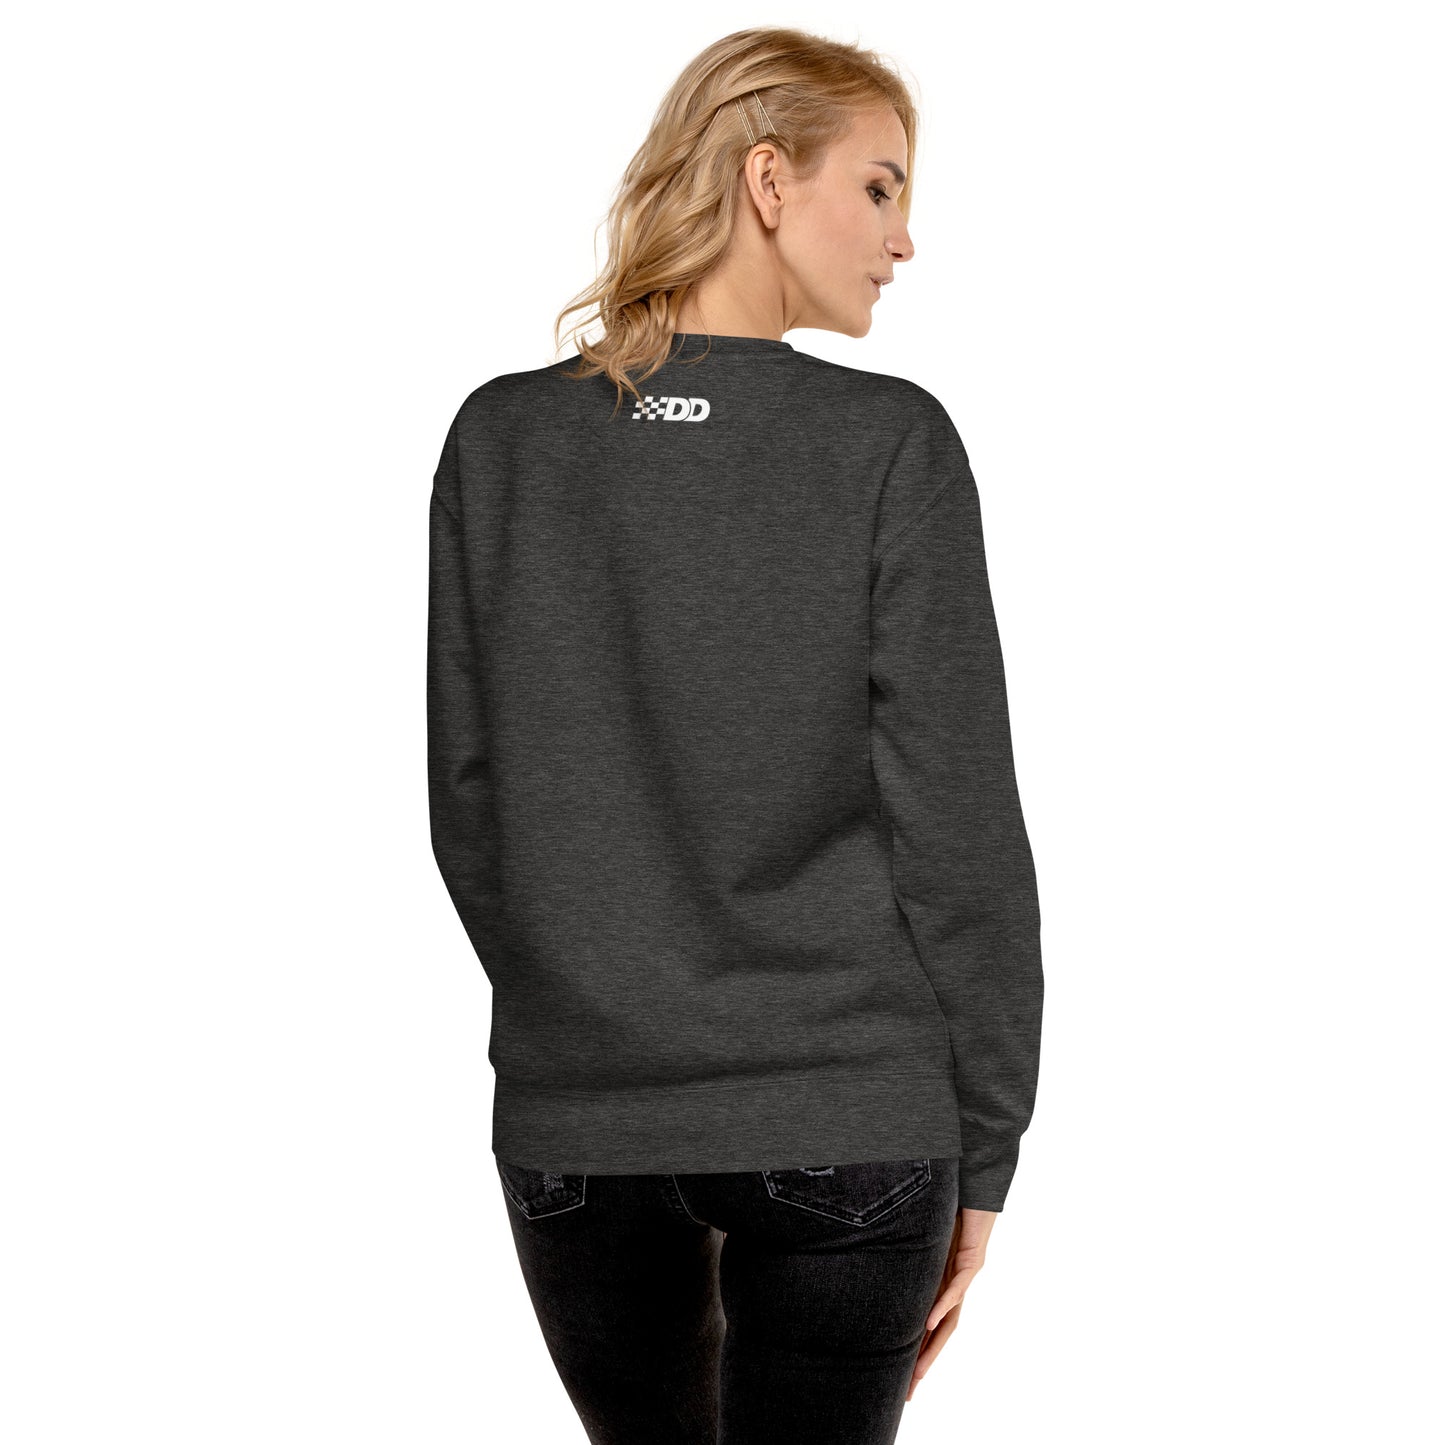 Unisex Premium Sweatshirt - [Daniel Dye Racing Shop]